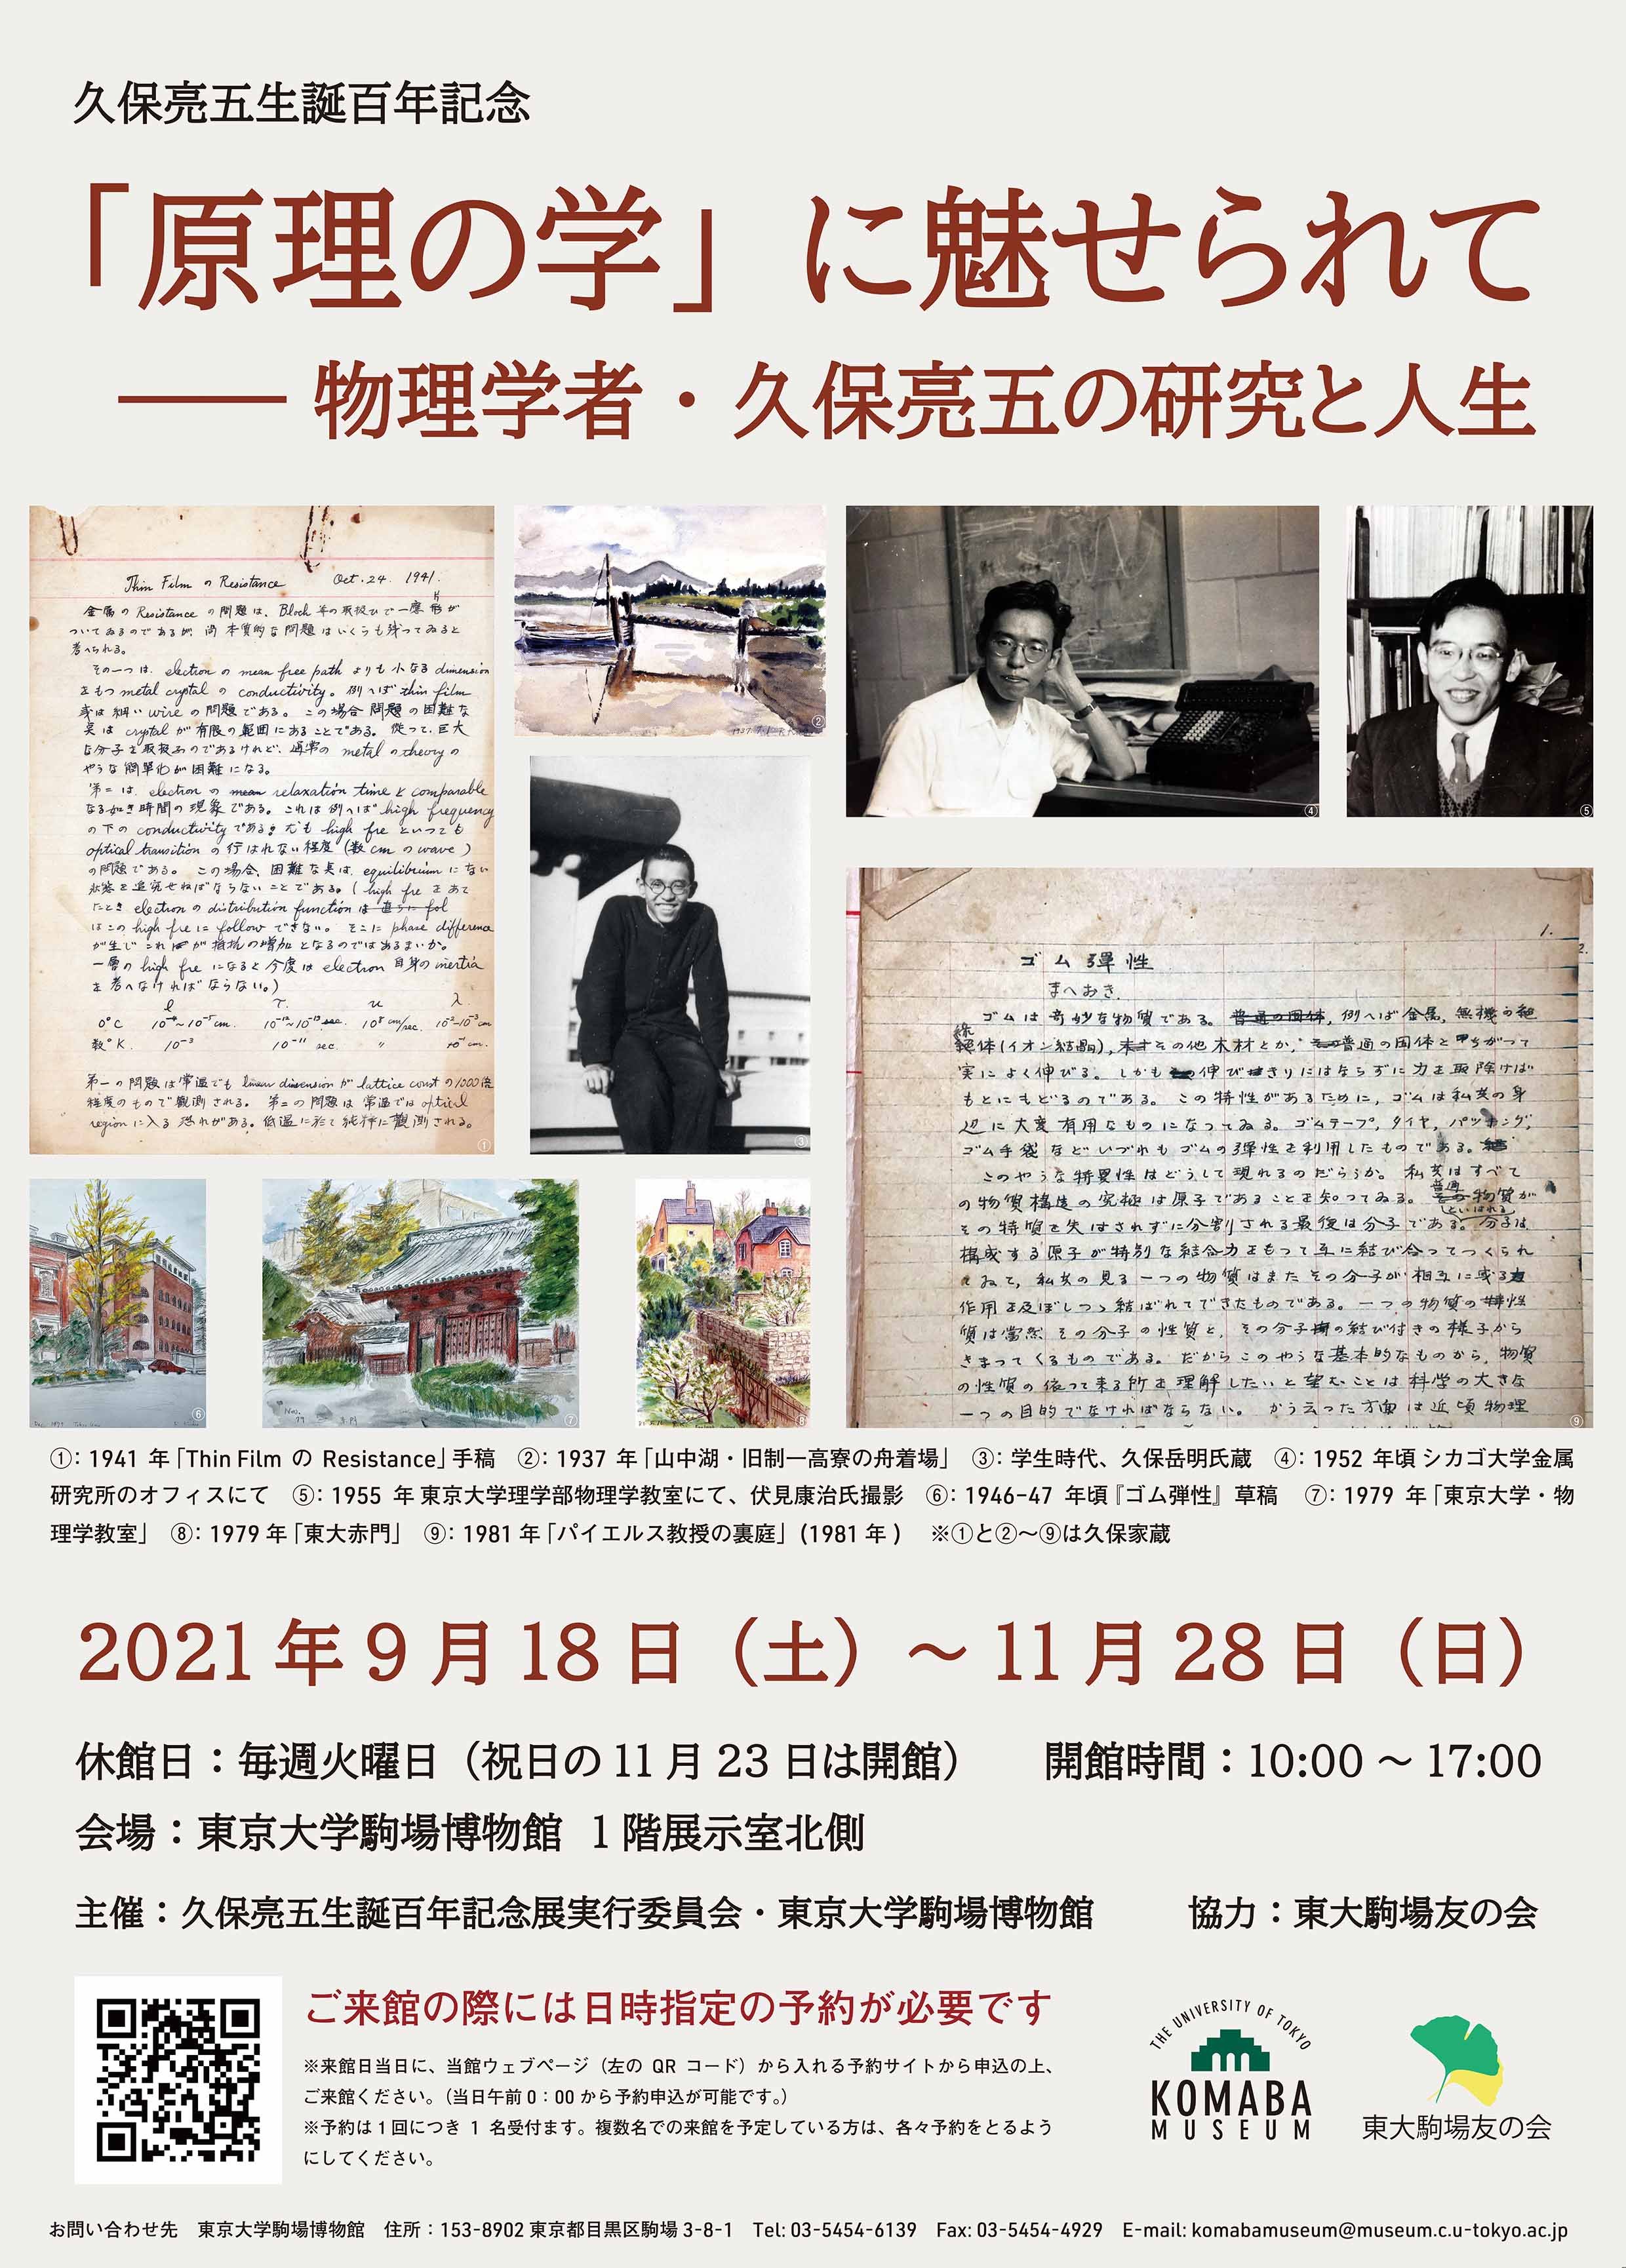 http://www.c.u-tokyo.ac.jp/info/news/events/images/20210918-museum2.jpg